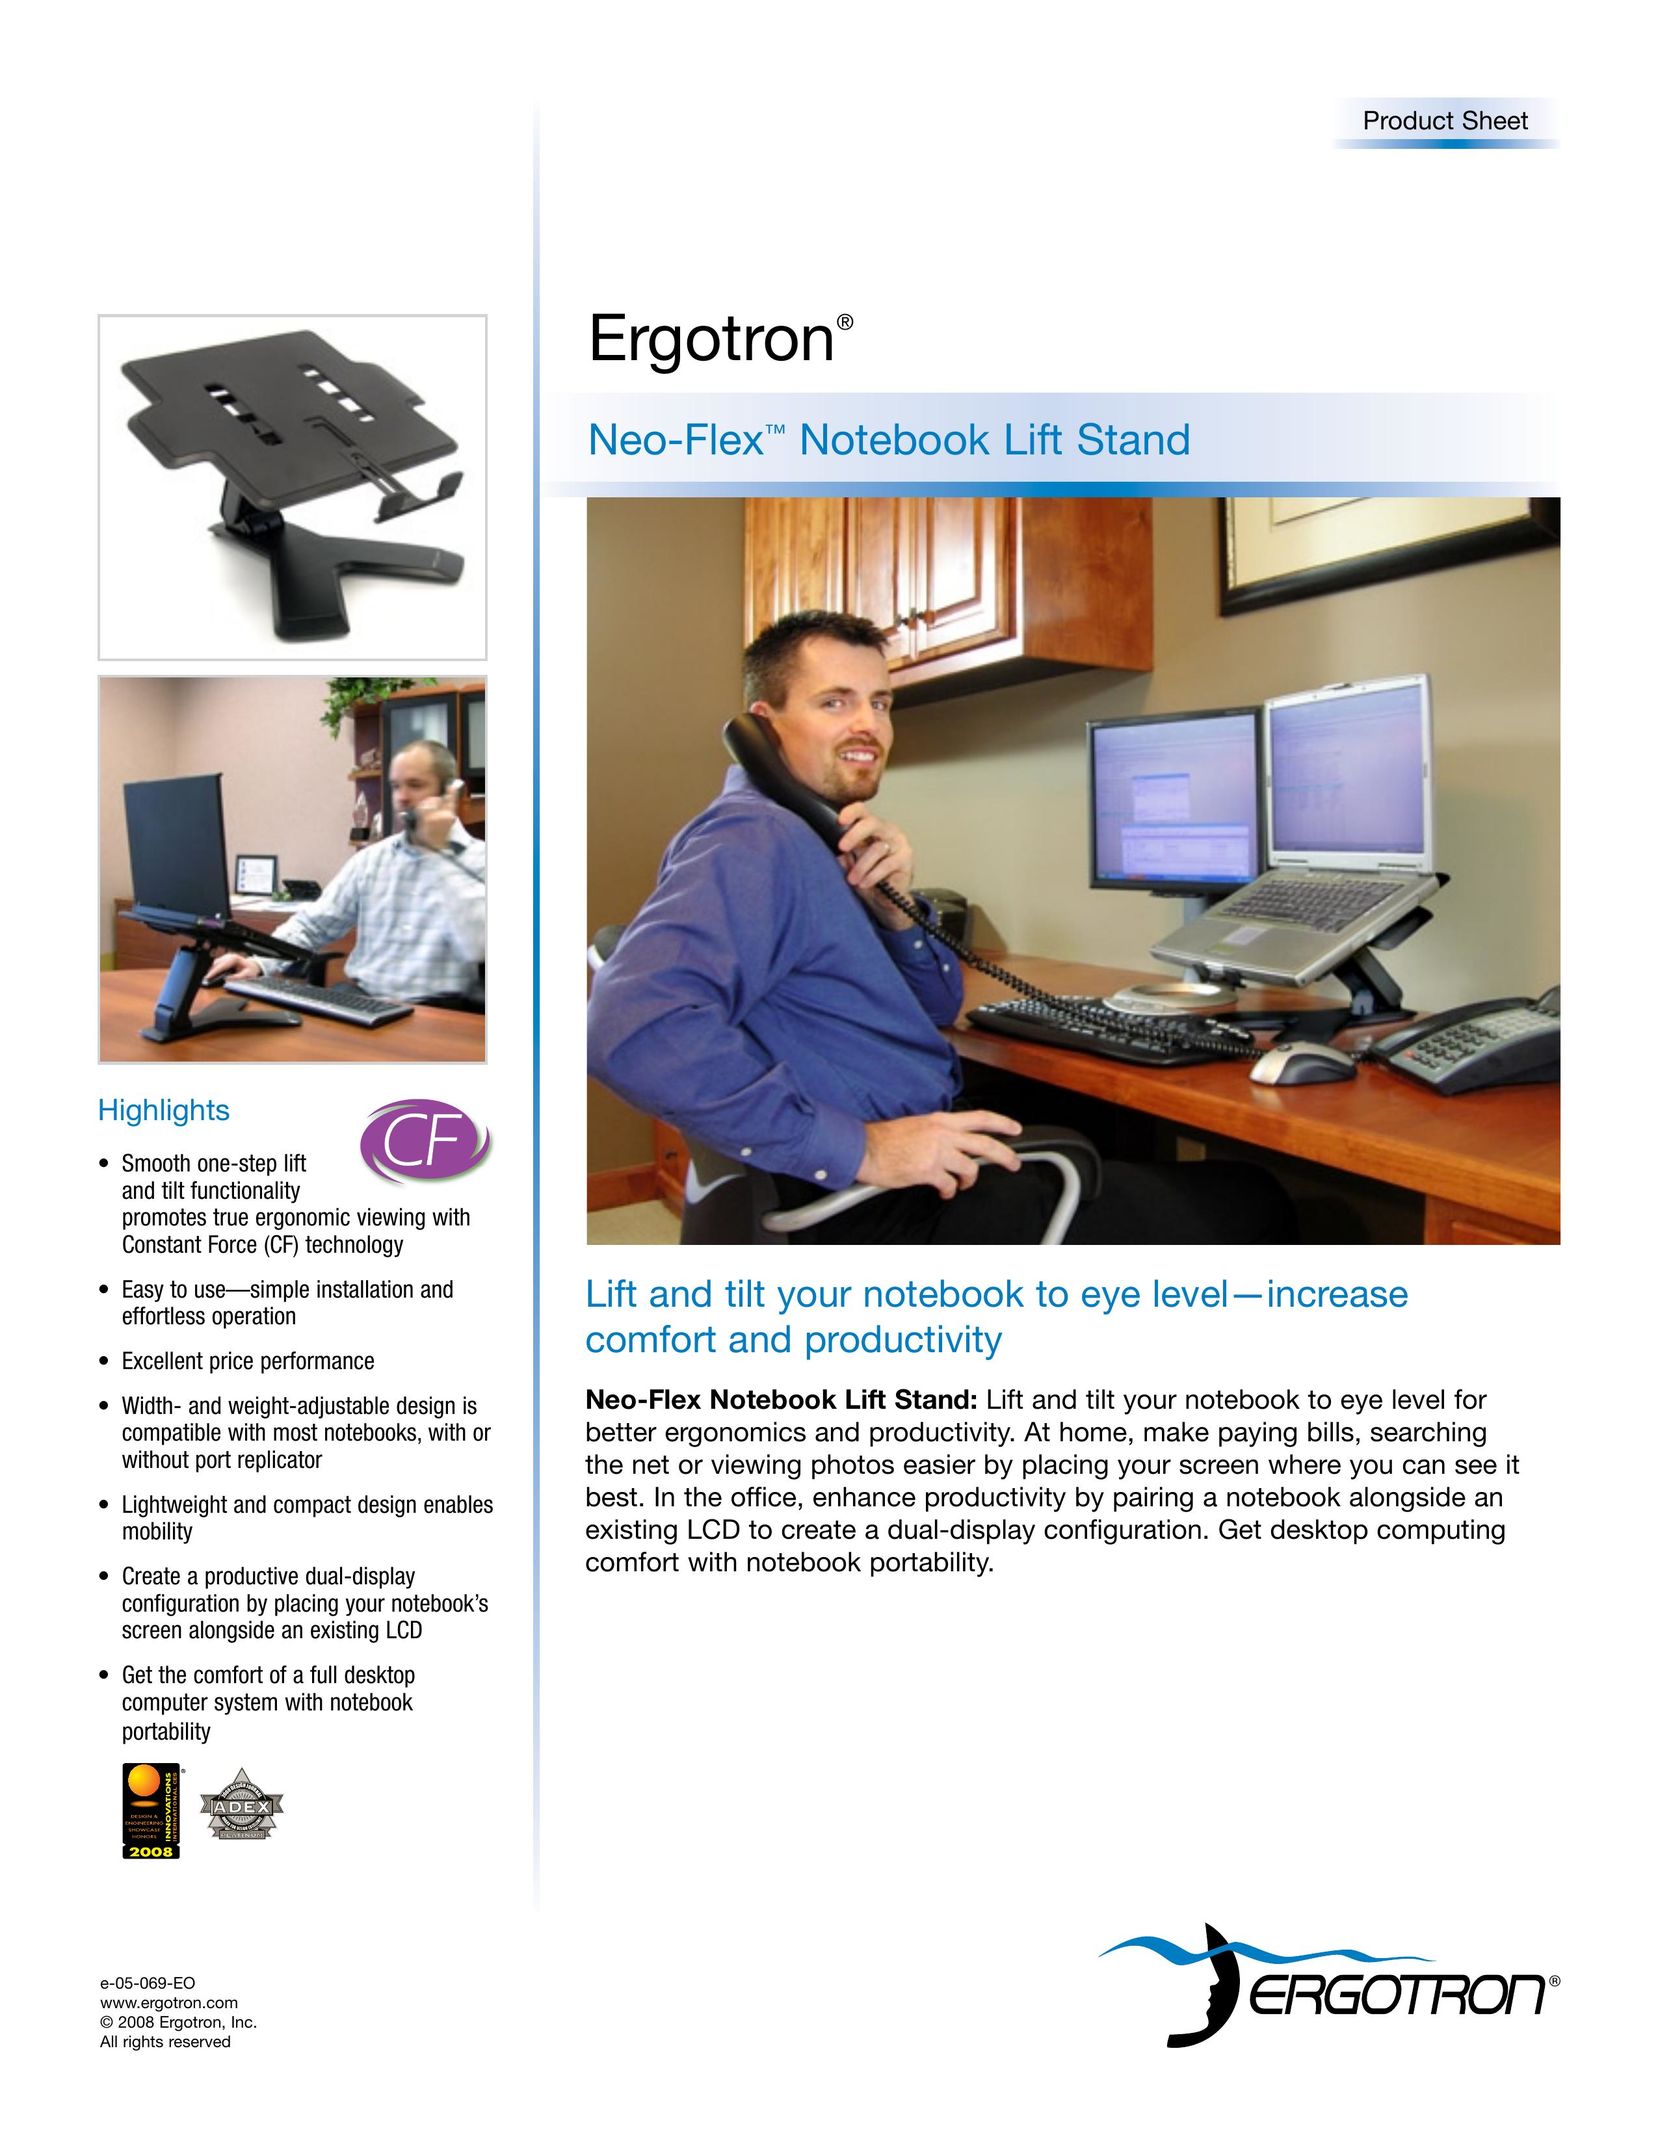 Ergotron 33-334-085 Indoor Furnishings User Manual